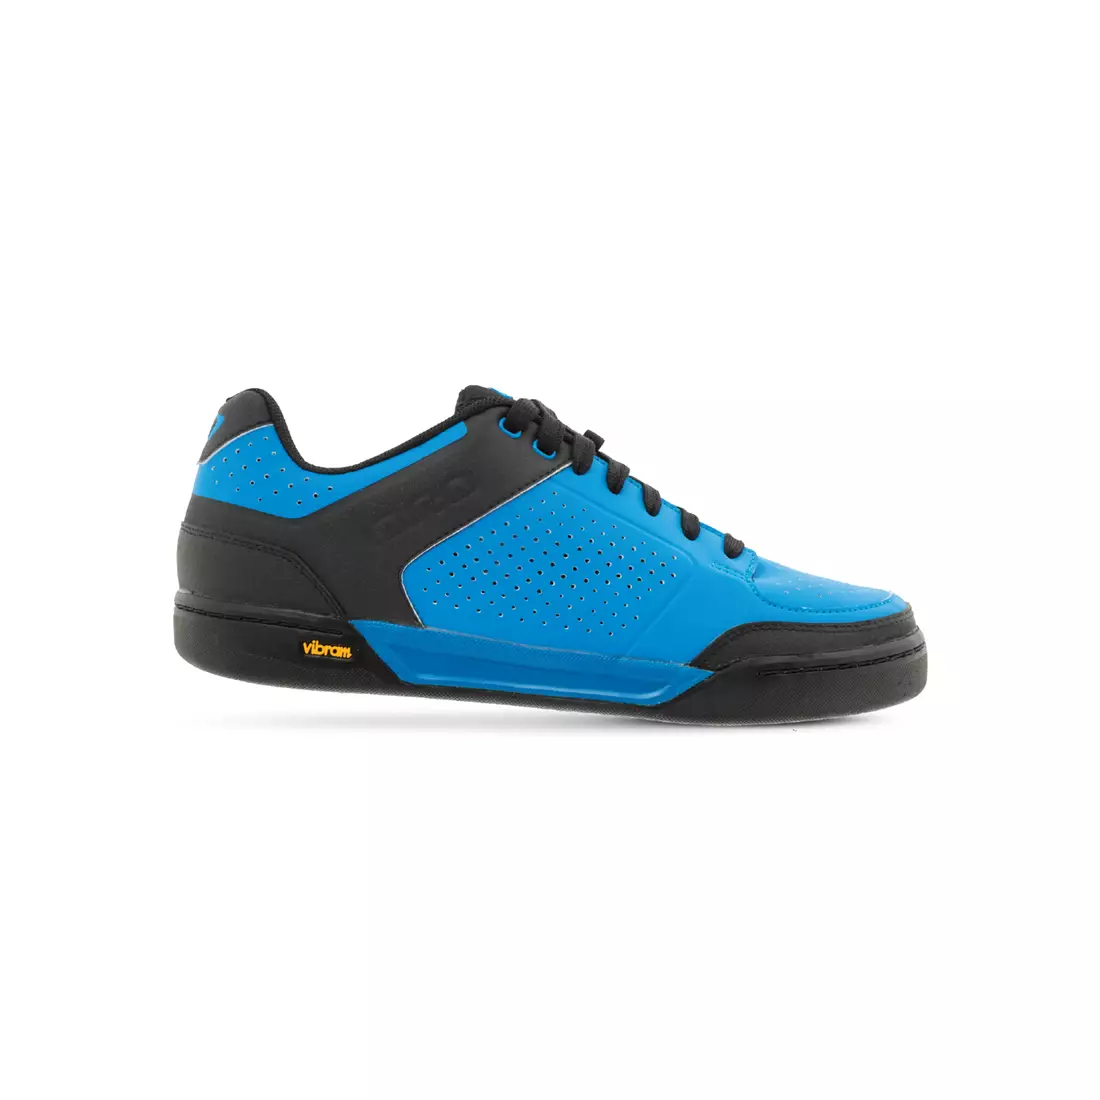 Pánska cyklistická obuv GIRO RIDDANCE blue jewel black 